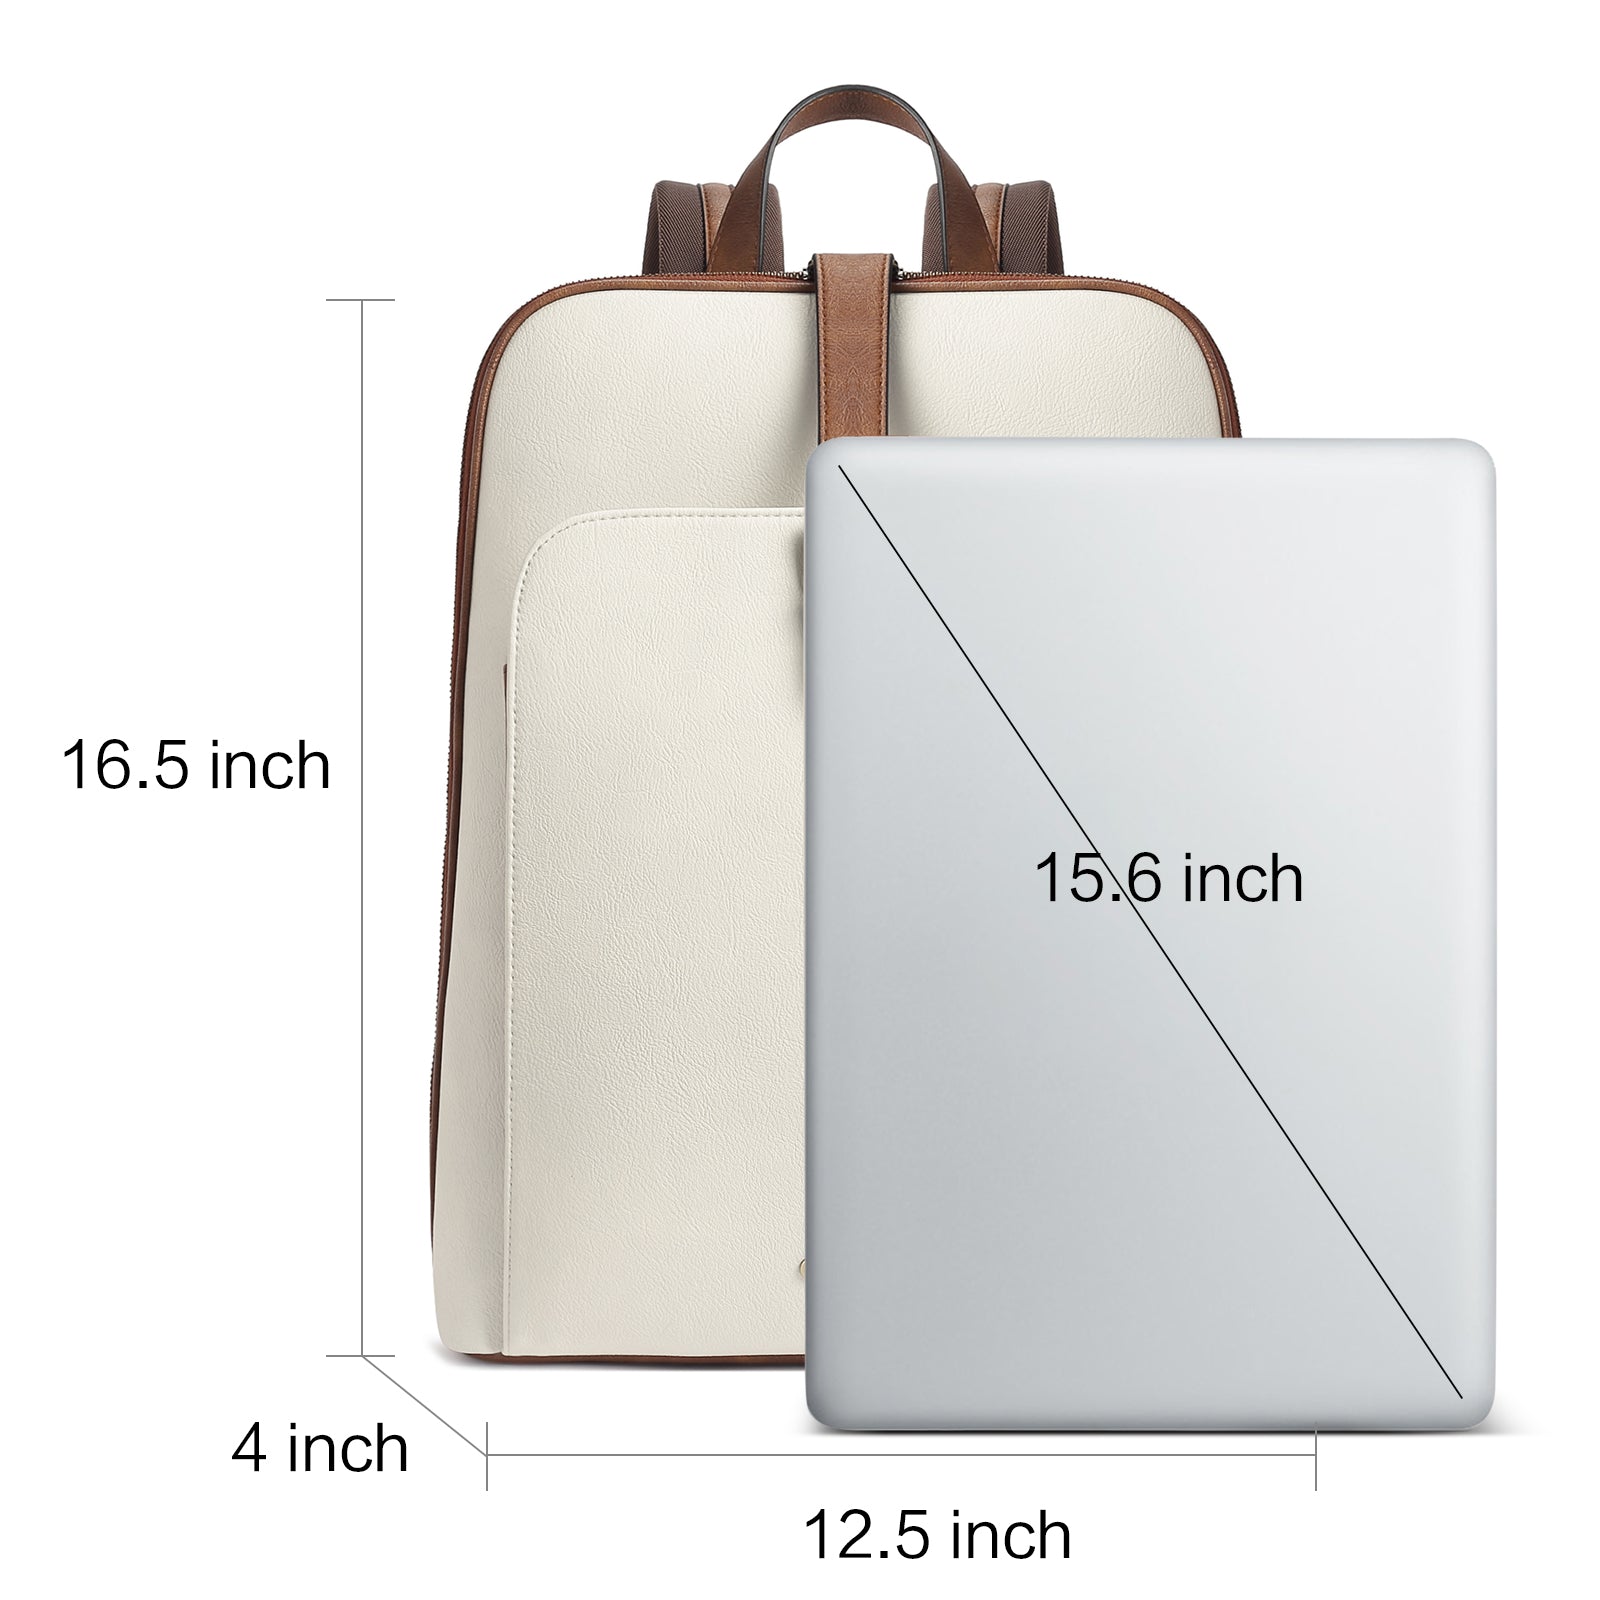 Koch Vegan Womens Designer Laptop Backpack With Luggage Strap